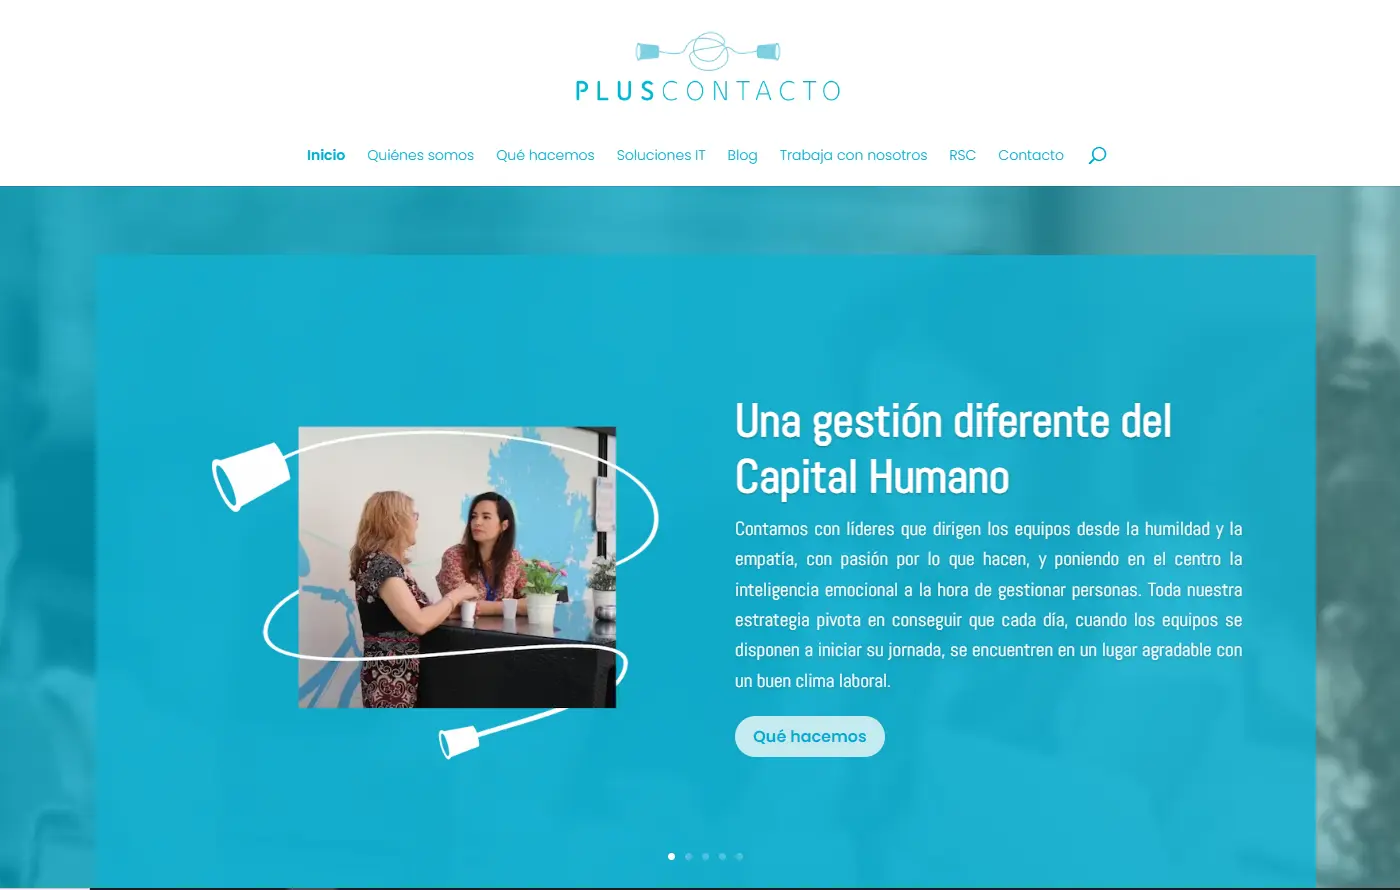 (c) Pluscontacto.com